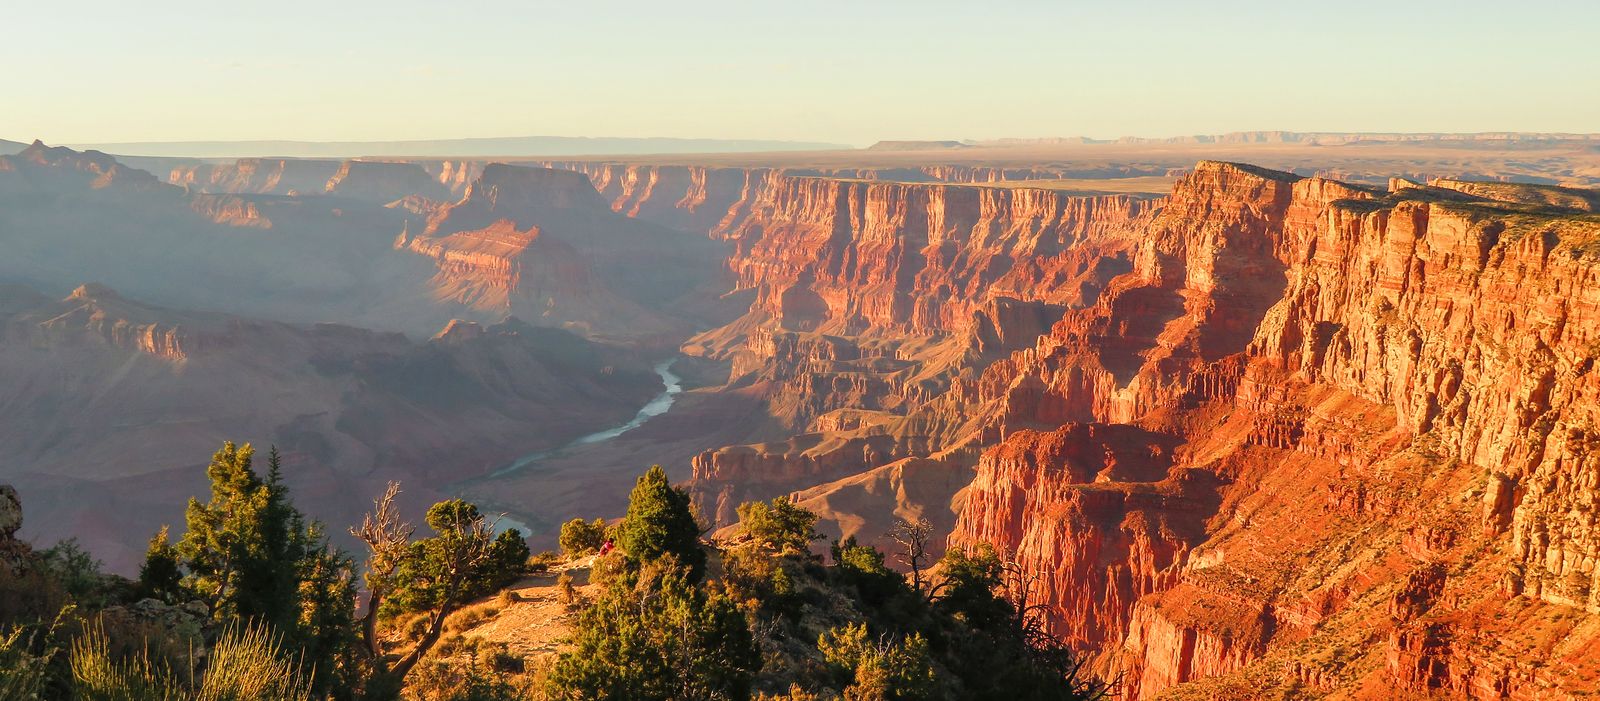 Eindrücke des Grand-Canyon-Nationalpark im US-Bundesstaat Arizona